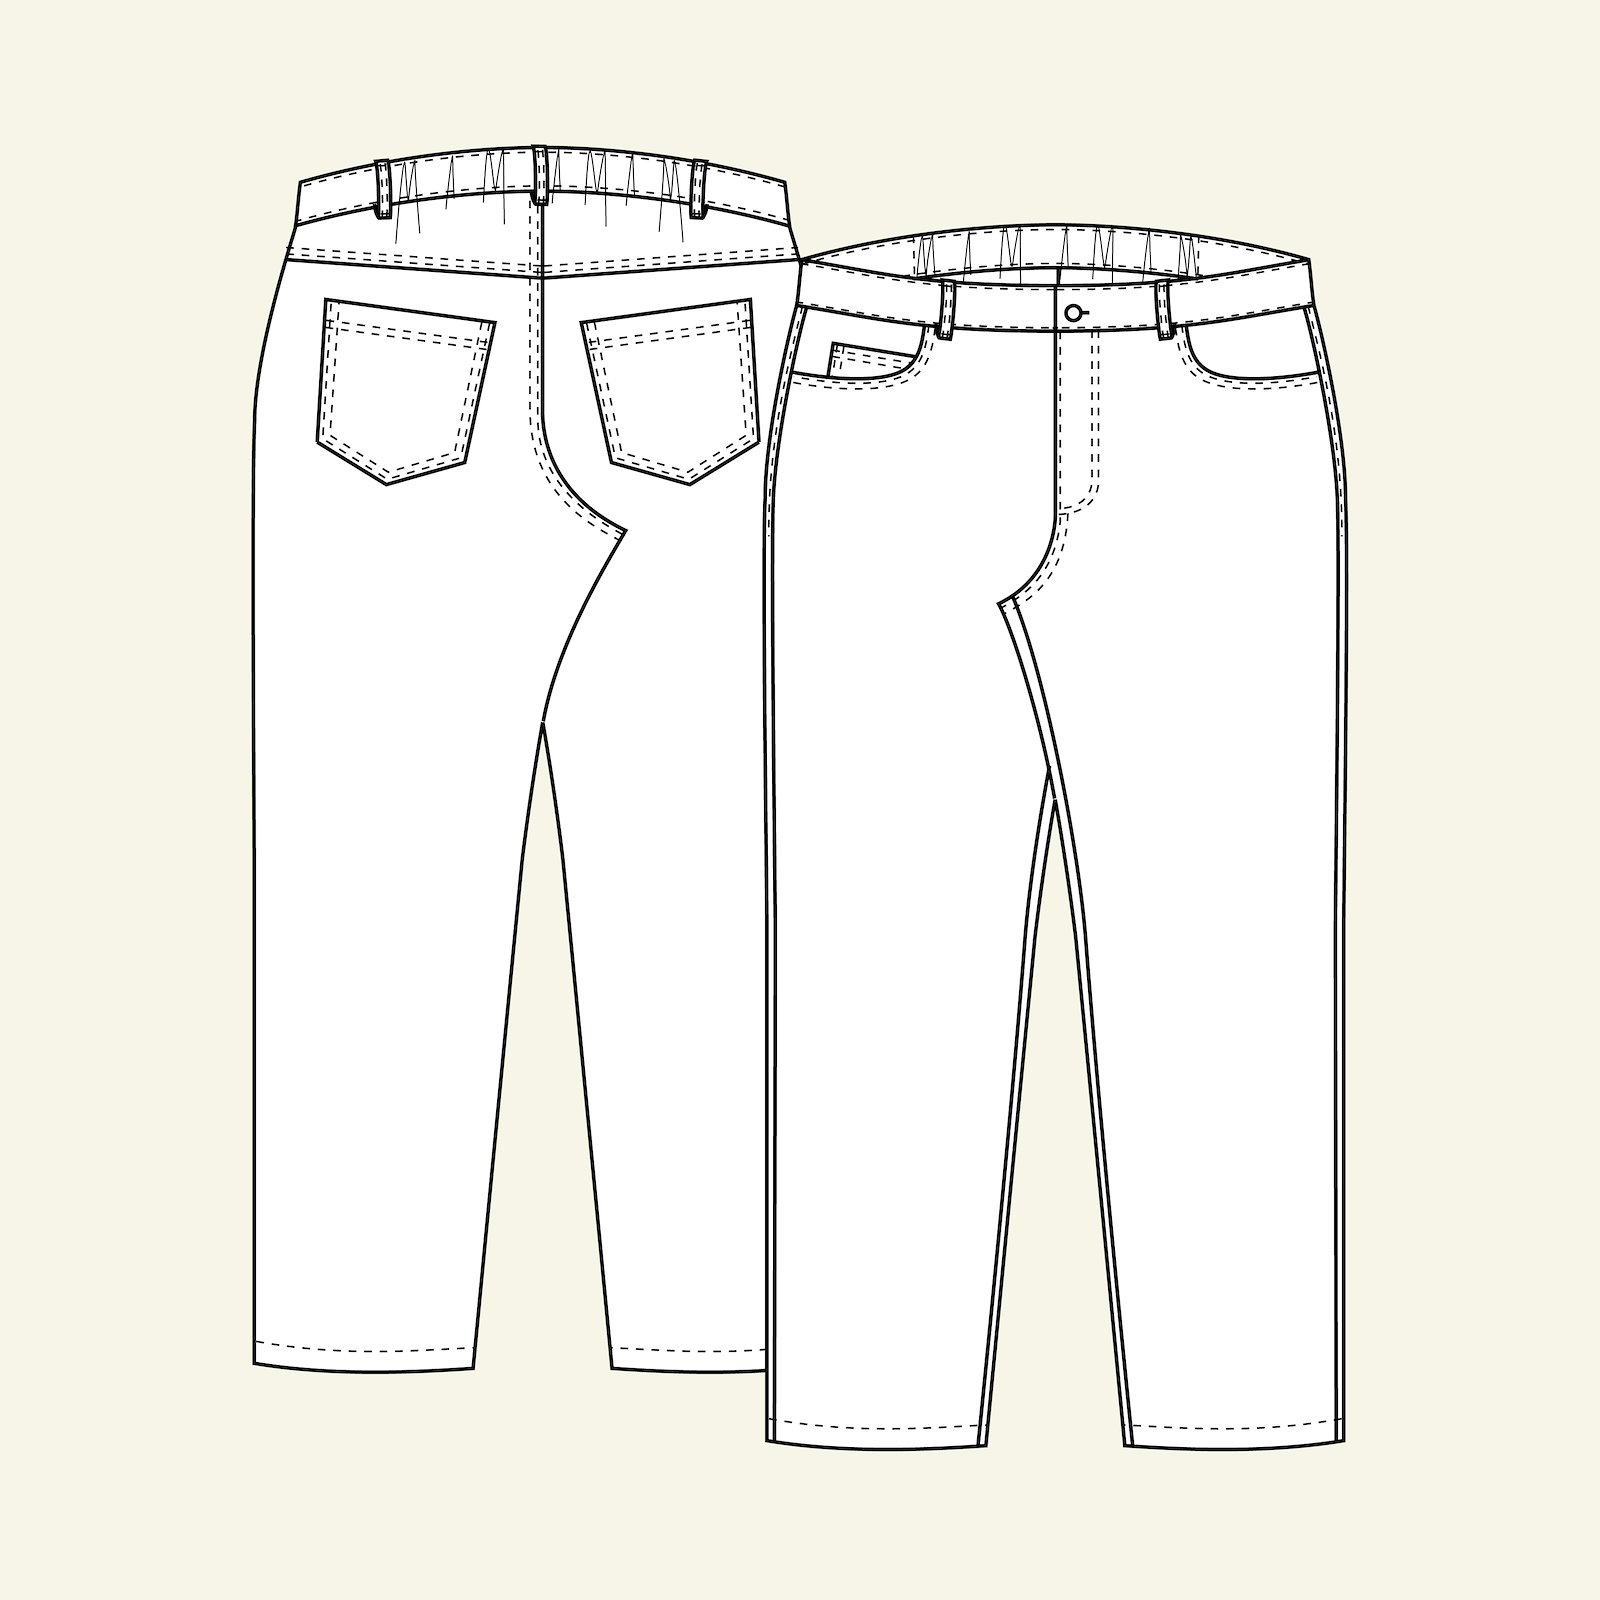 Klassisk jeans med resårlinning bak, 46 p70007000_p70007001_p70007002_p70007003_p70007004_pack_b